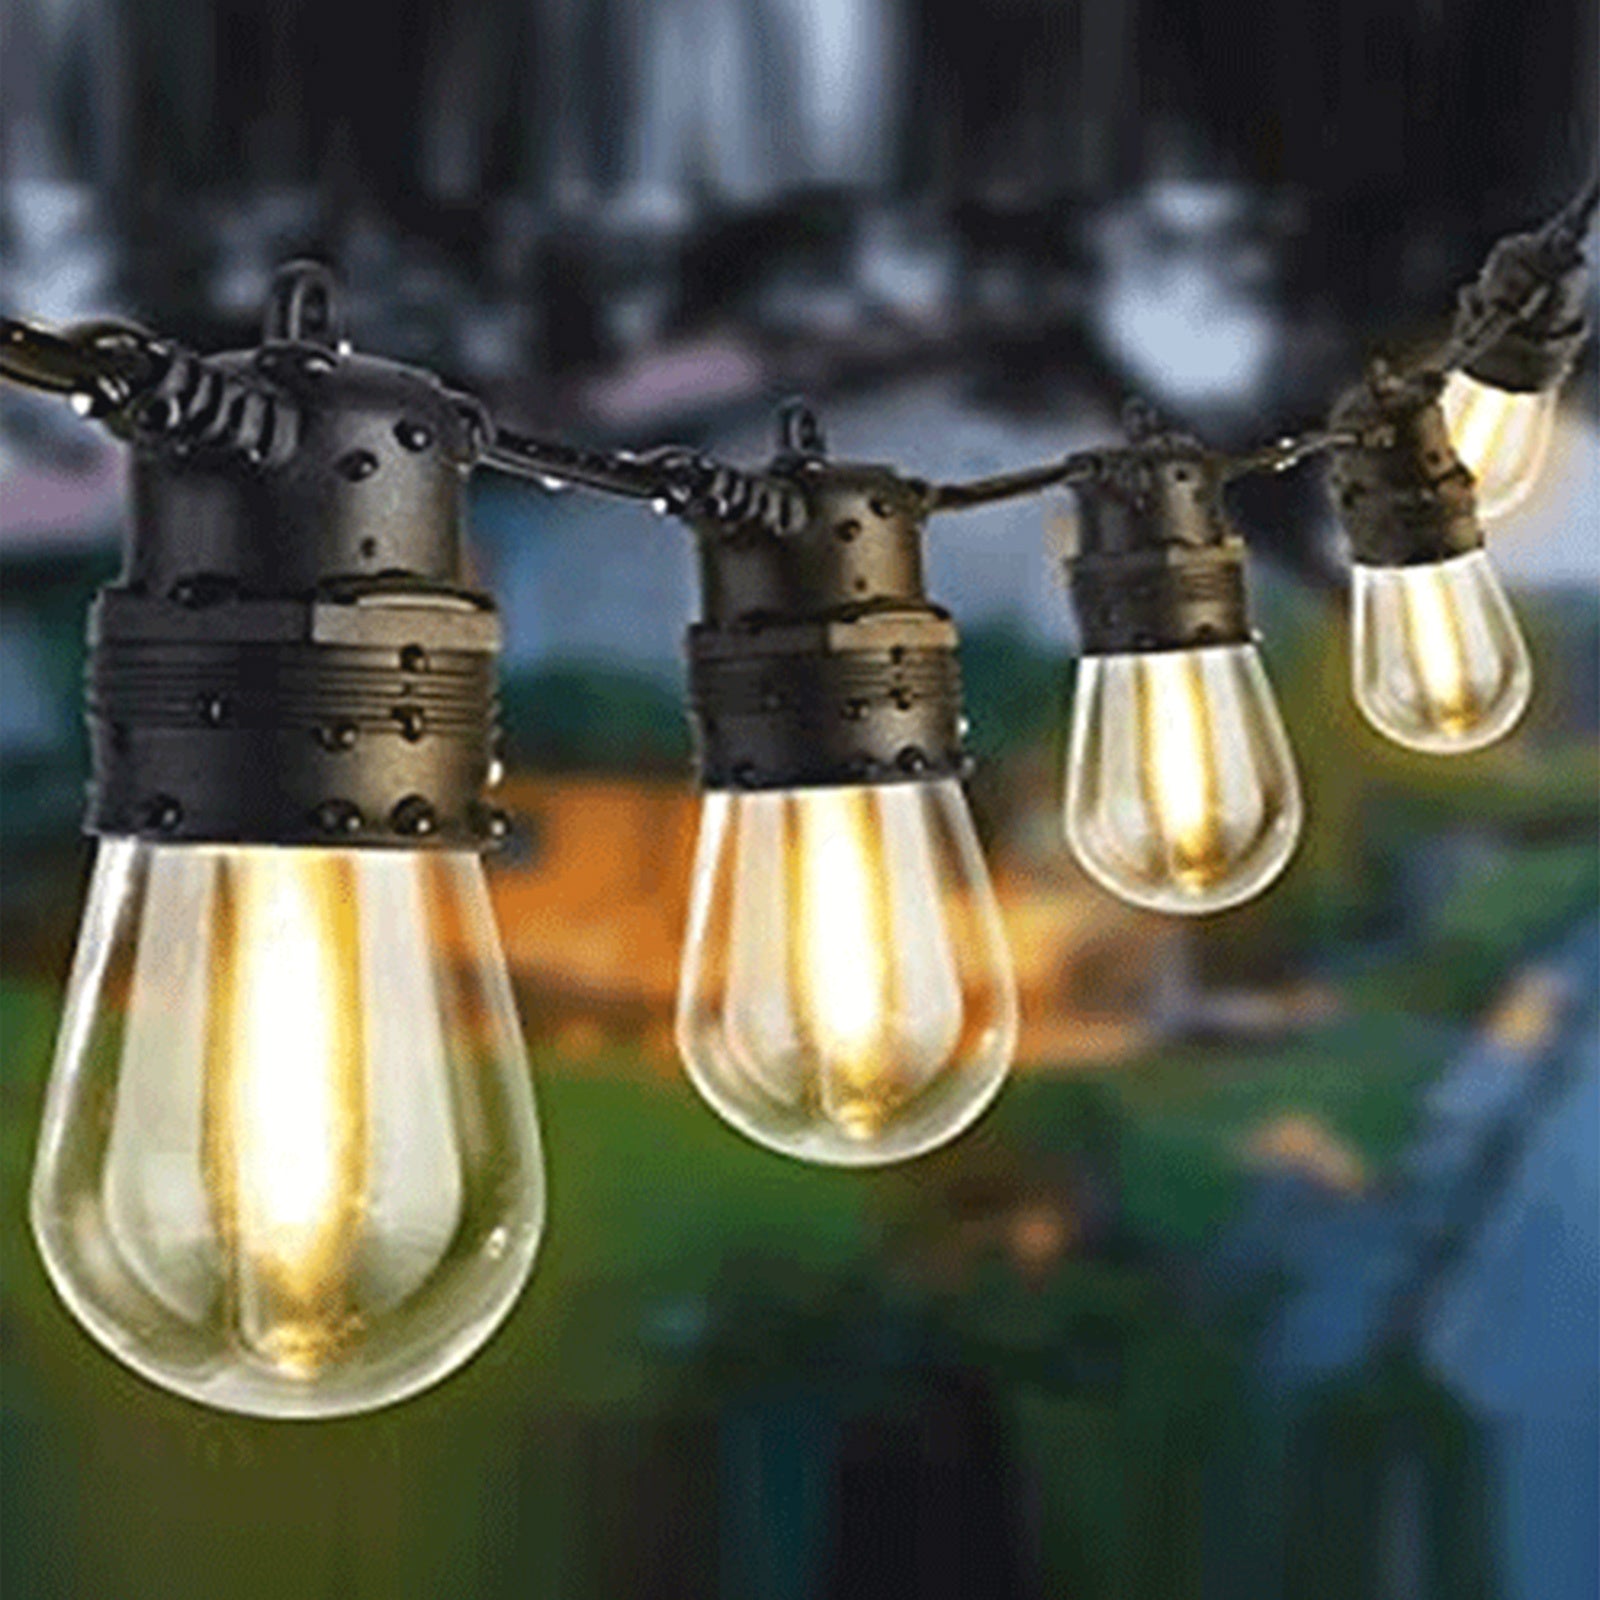 Sansai 20 Bulbs 23M Festoon String Lights LED Waterproof Outdoor - Outdoorium